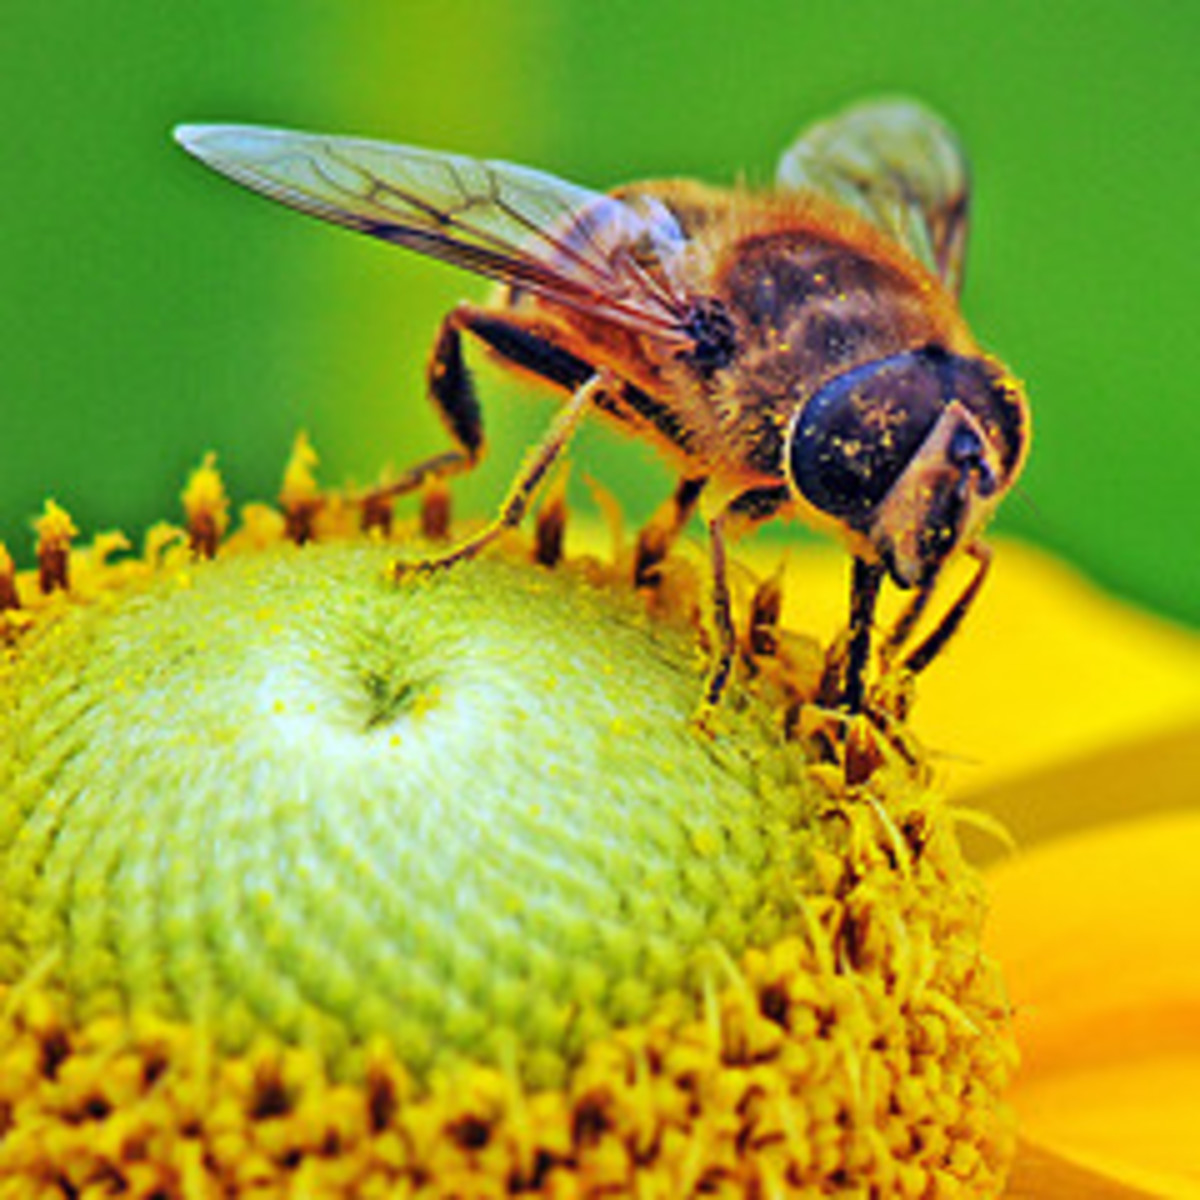 Bees love Yellow